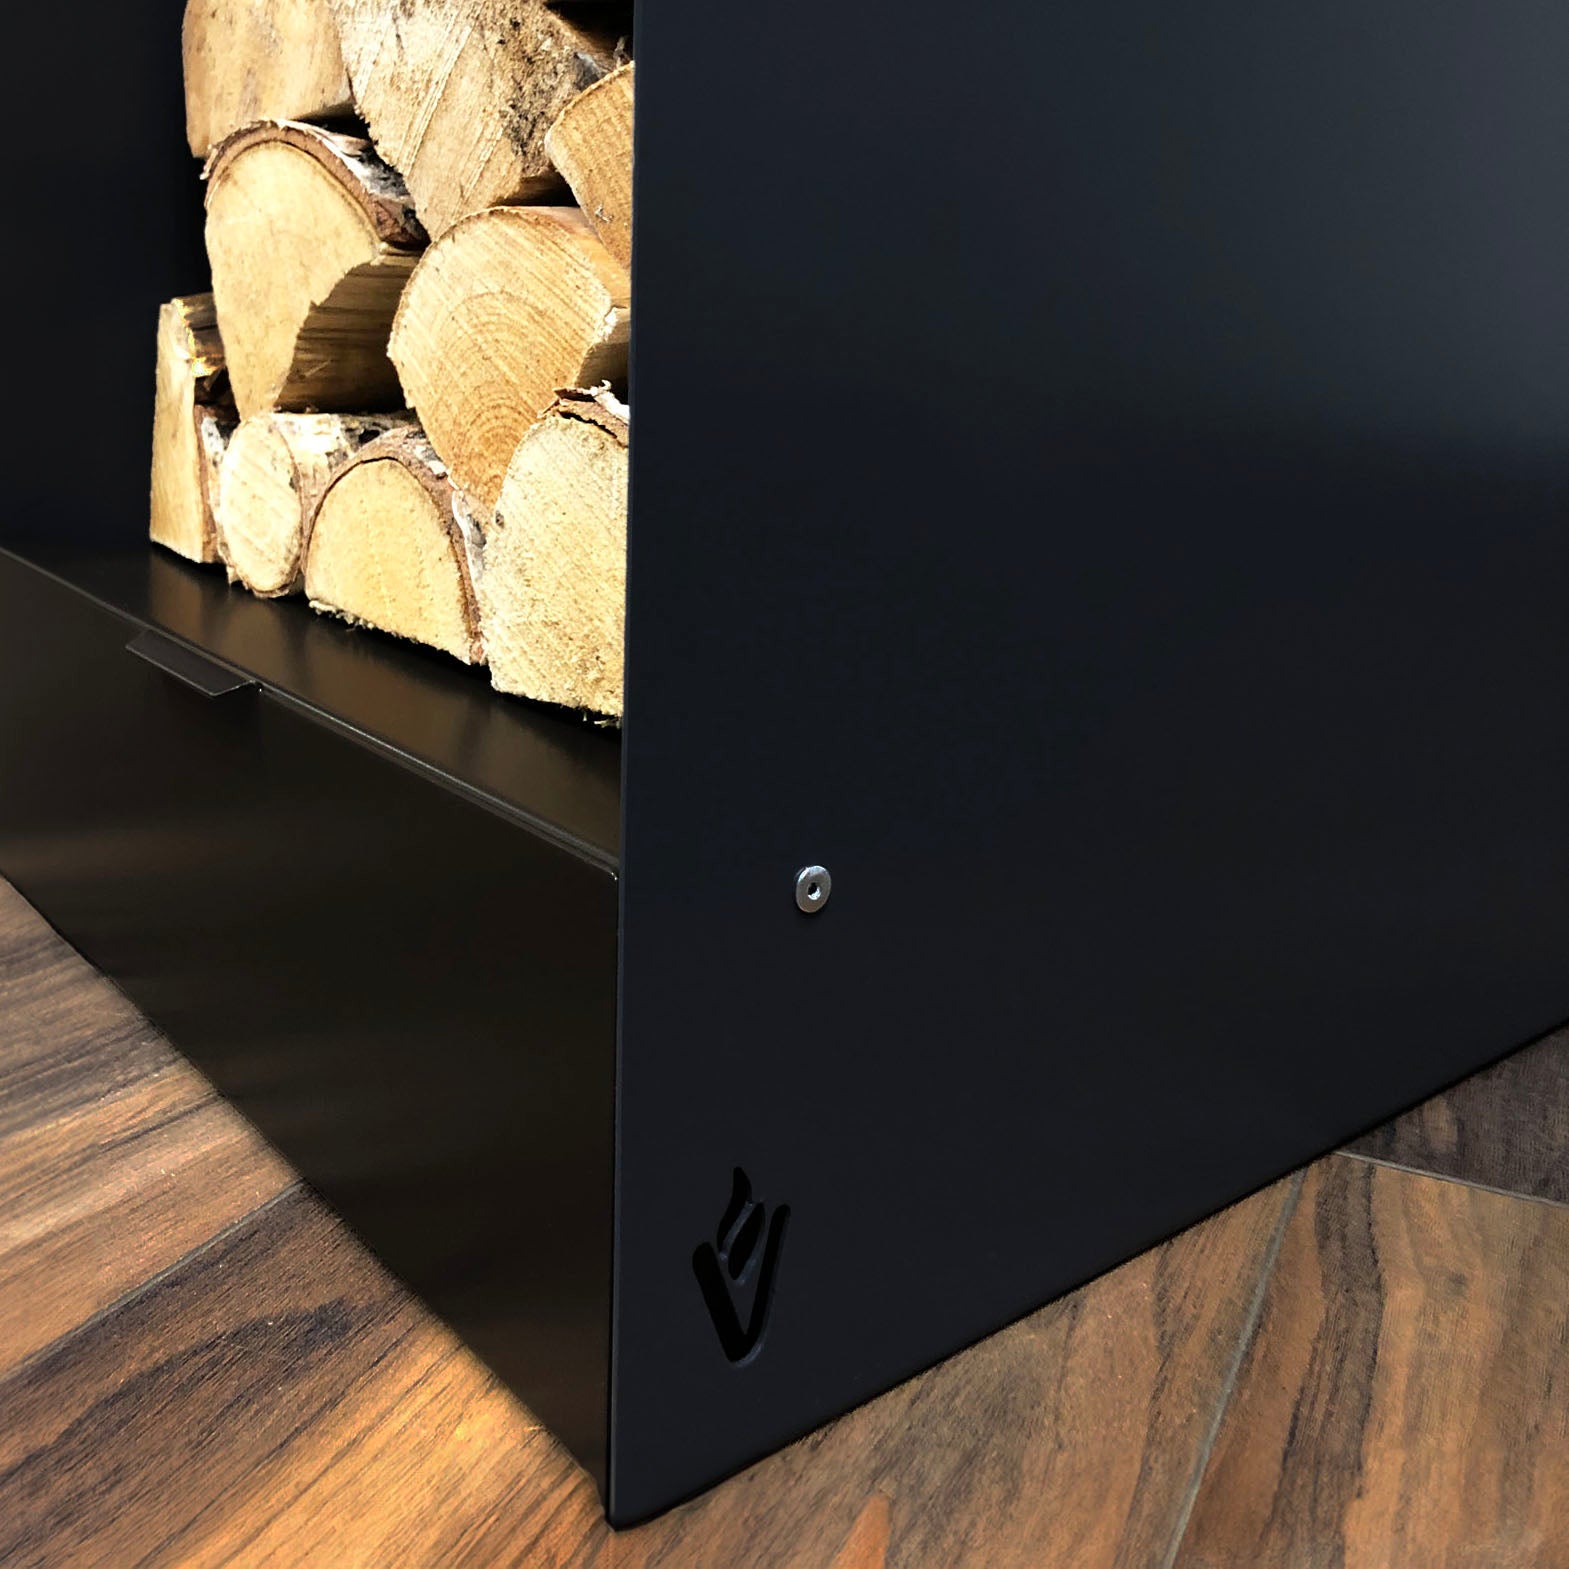 Volcann™ Log Store with Storage Drawer